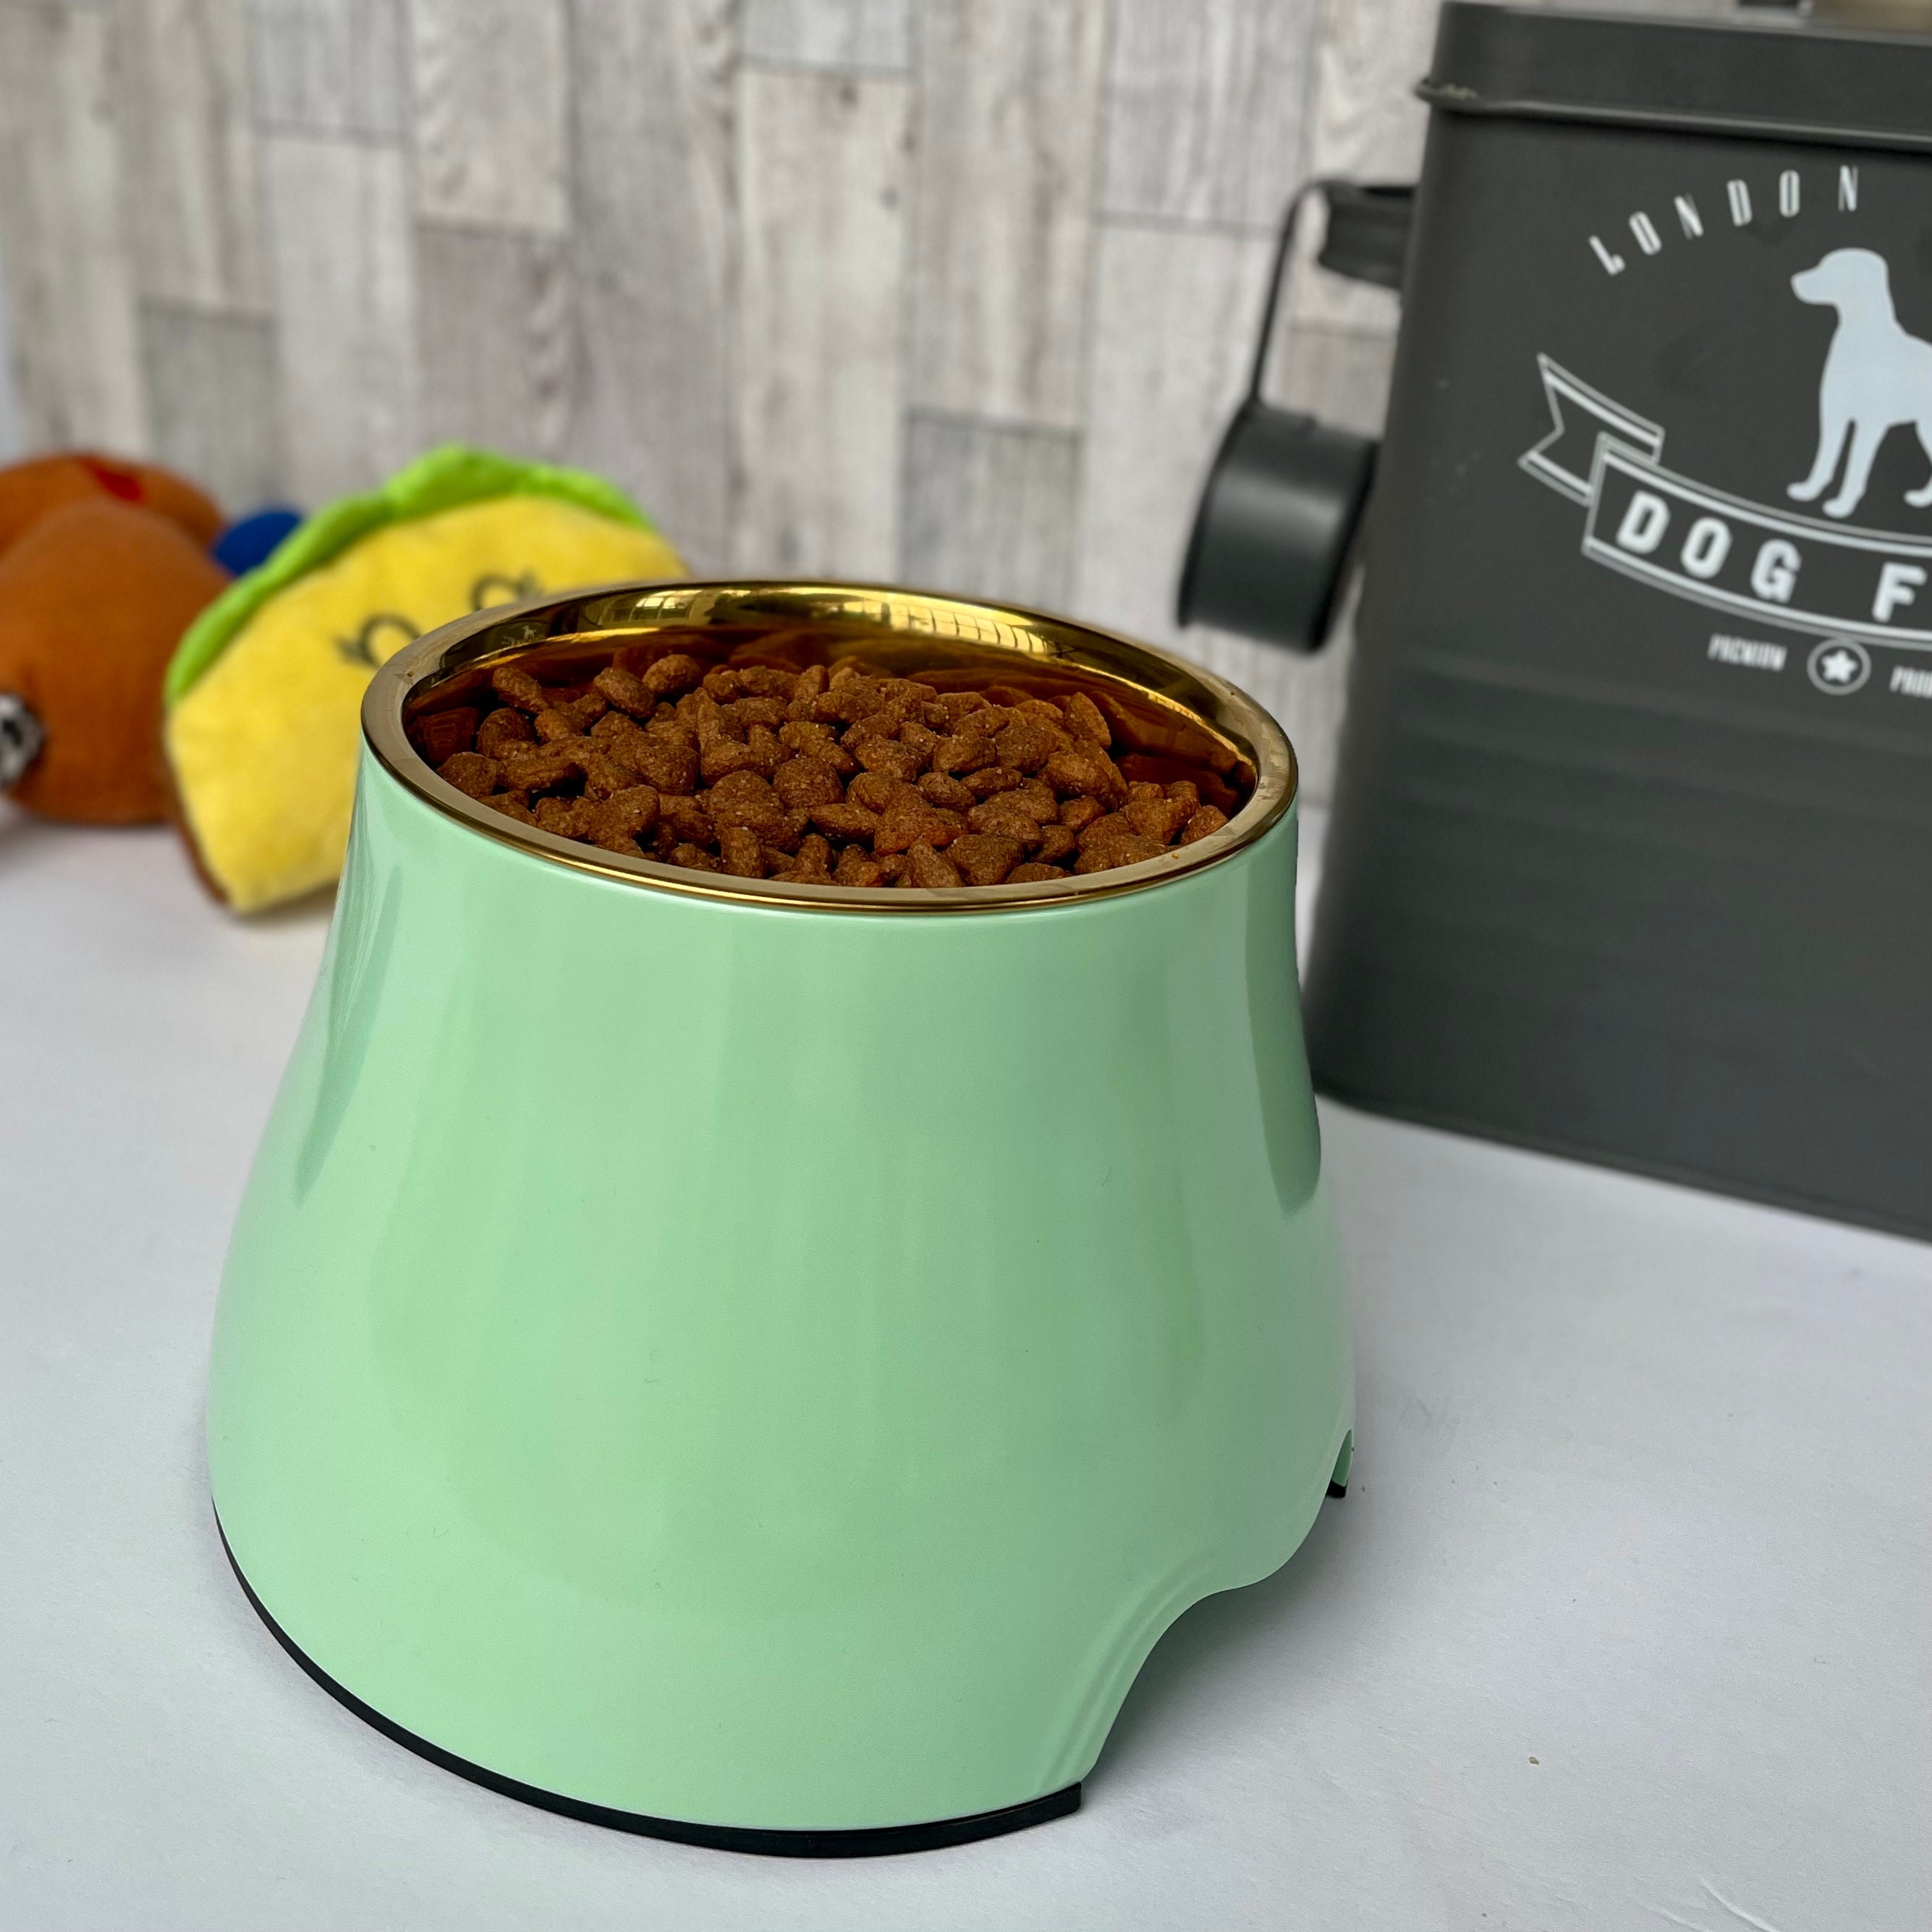 Dogit Elevated Dog Bowl, dog Food & Water Bowls